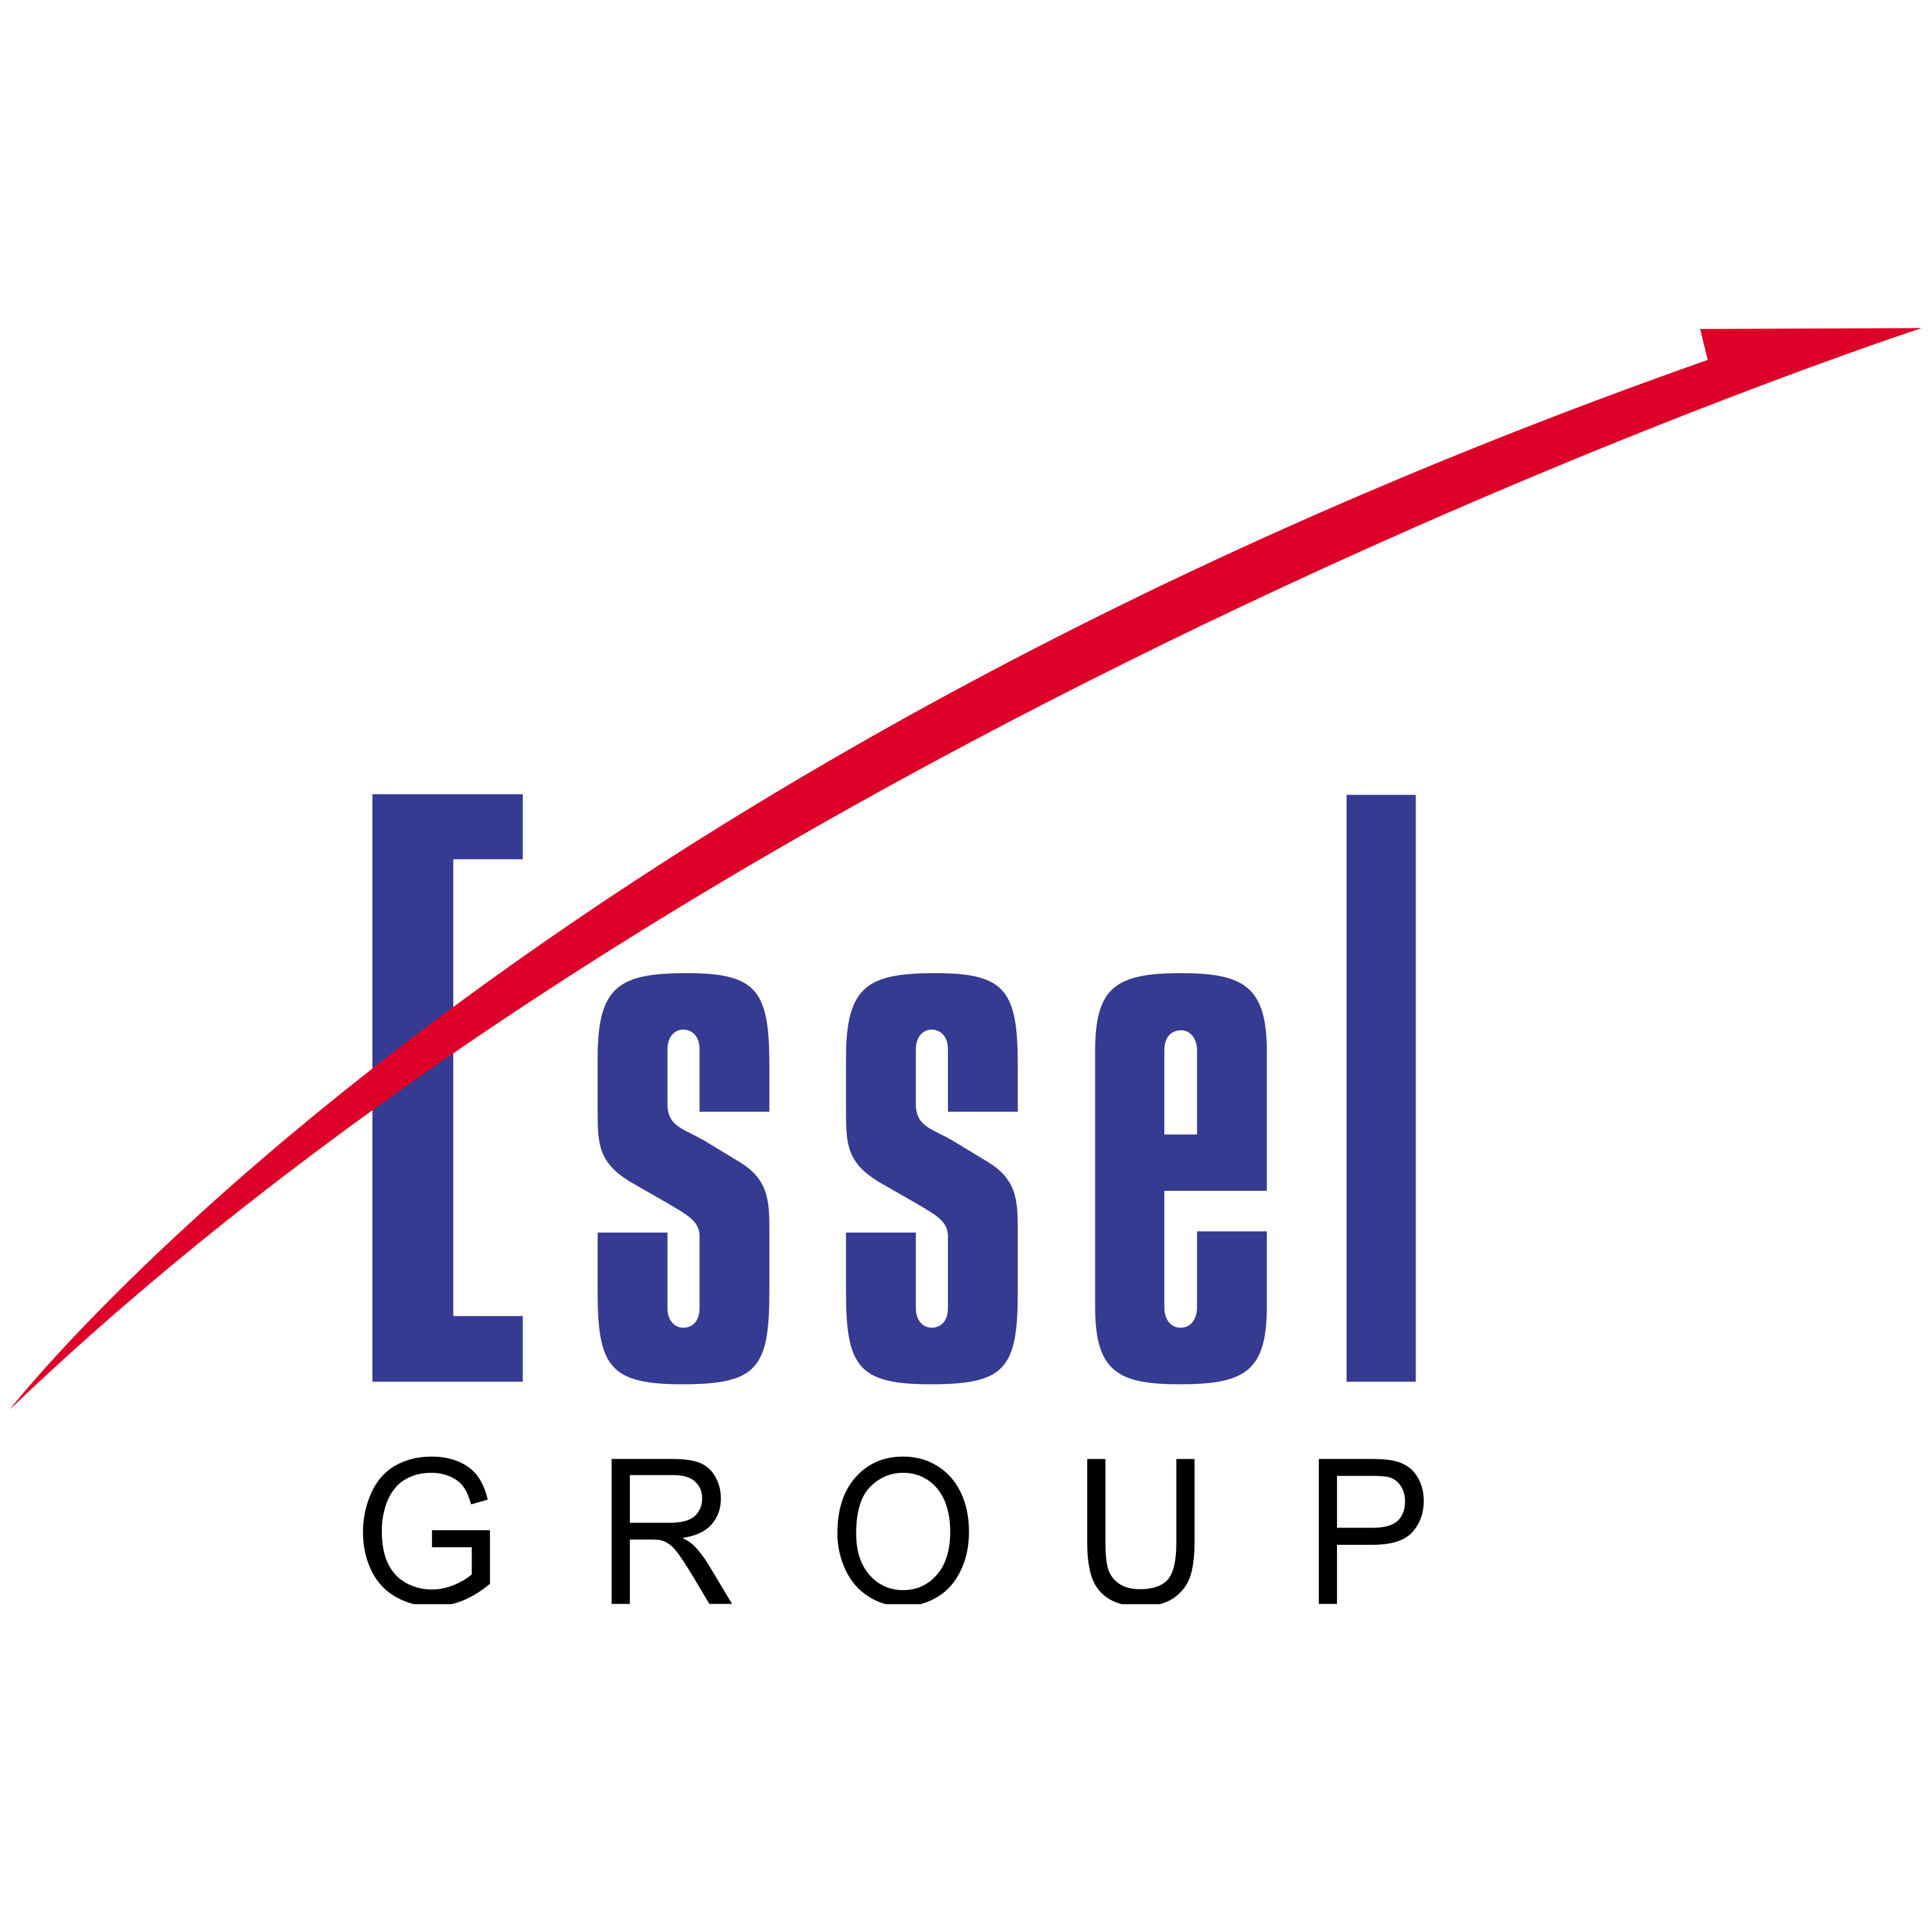 Essel Group Logo Transparent Image